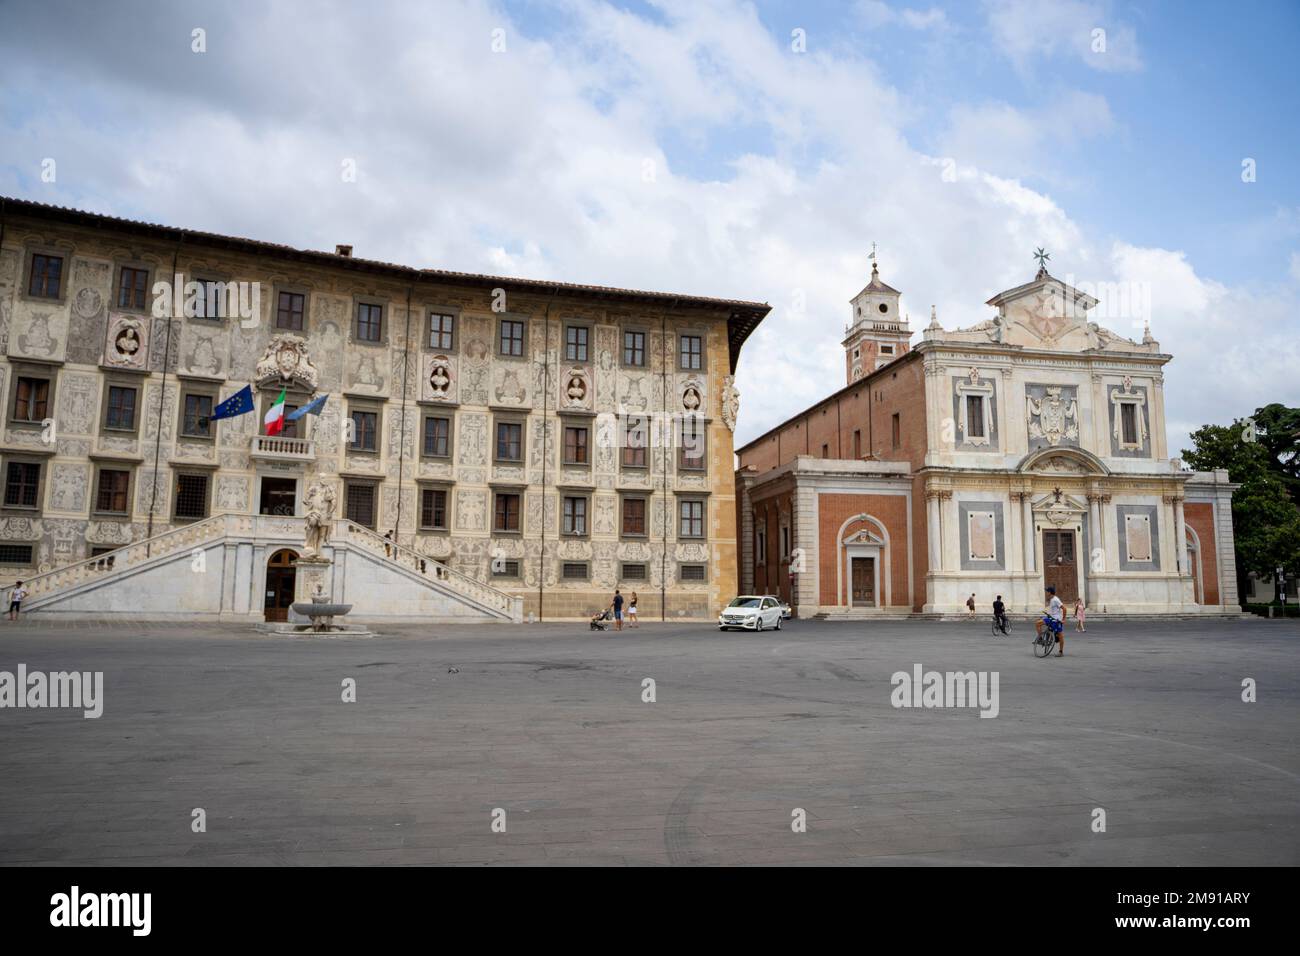 Public square in Pisa, Italy Stock Photo